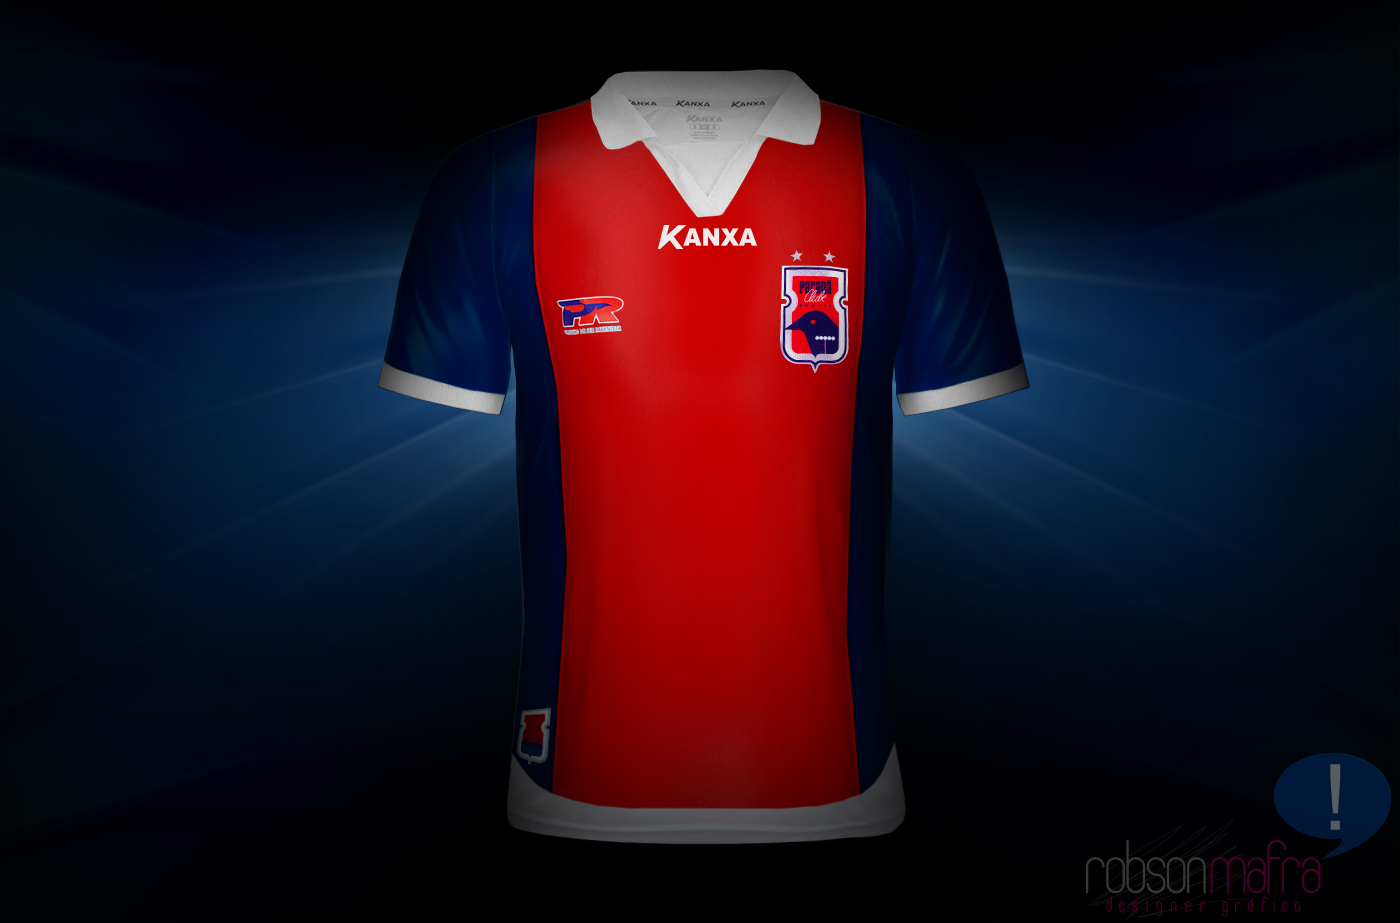 Camisa Oficial III Paraná Clube Kanxa 2012 away